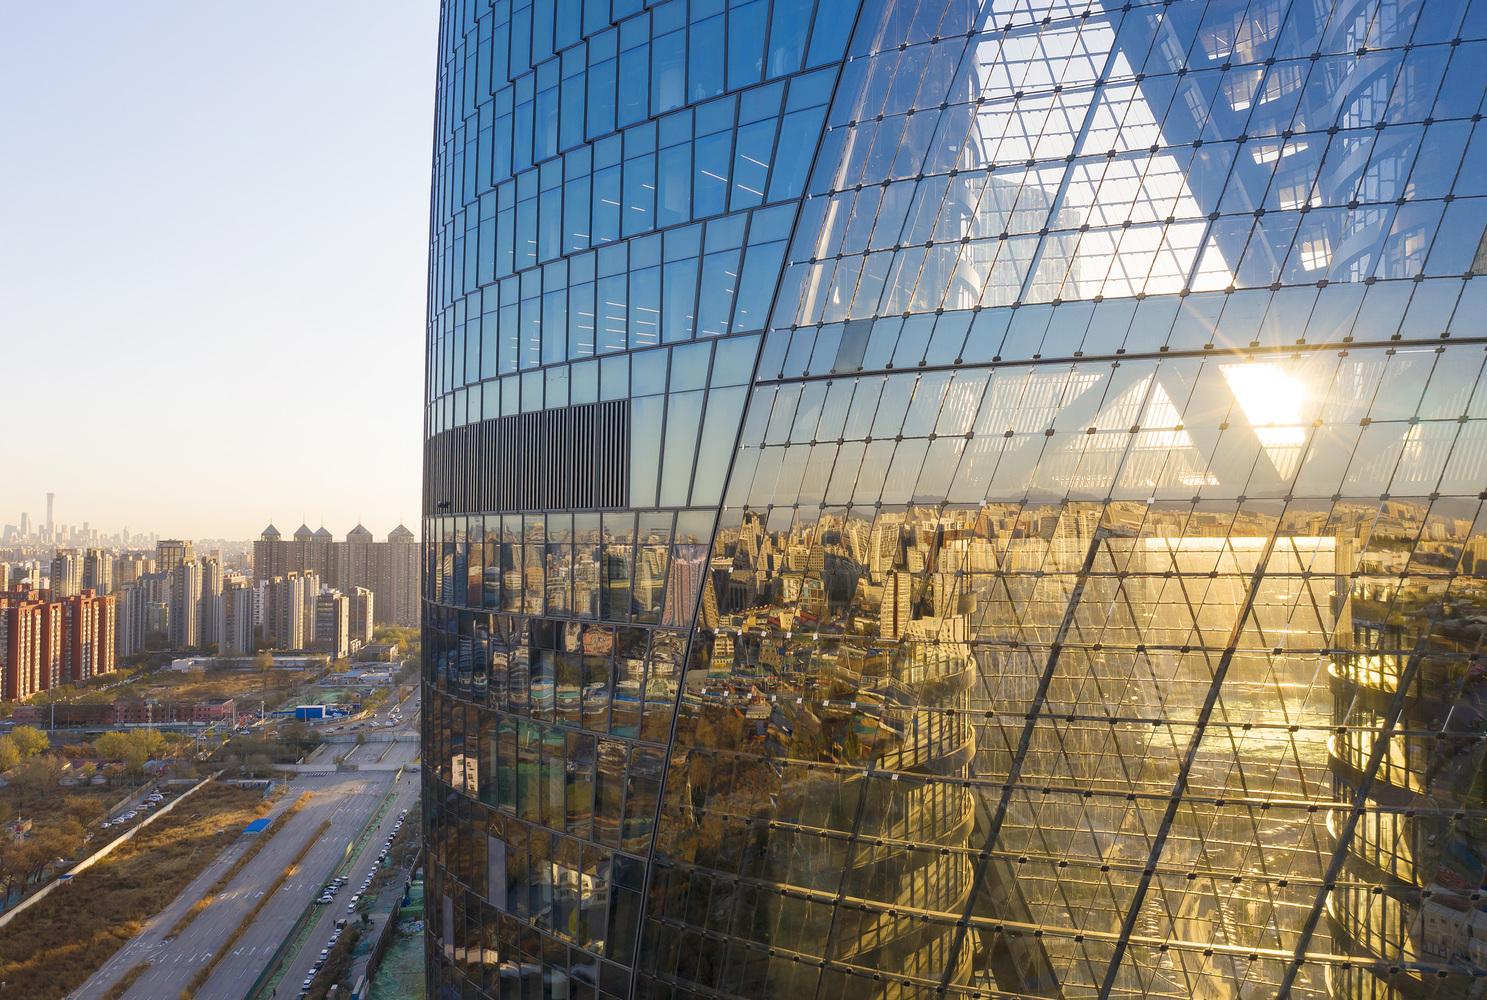 Zaha Hadid團隊新作Leeza SOHO塔 以先進技術把北京城市景象盡收眼底